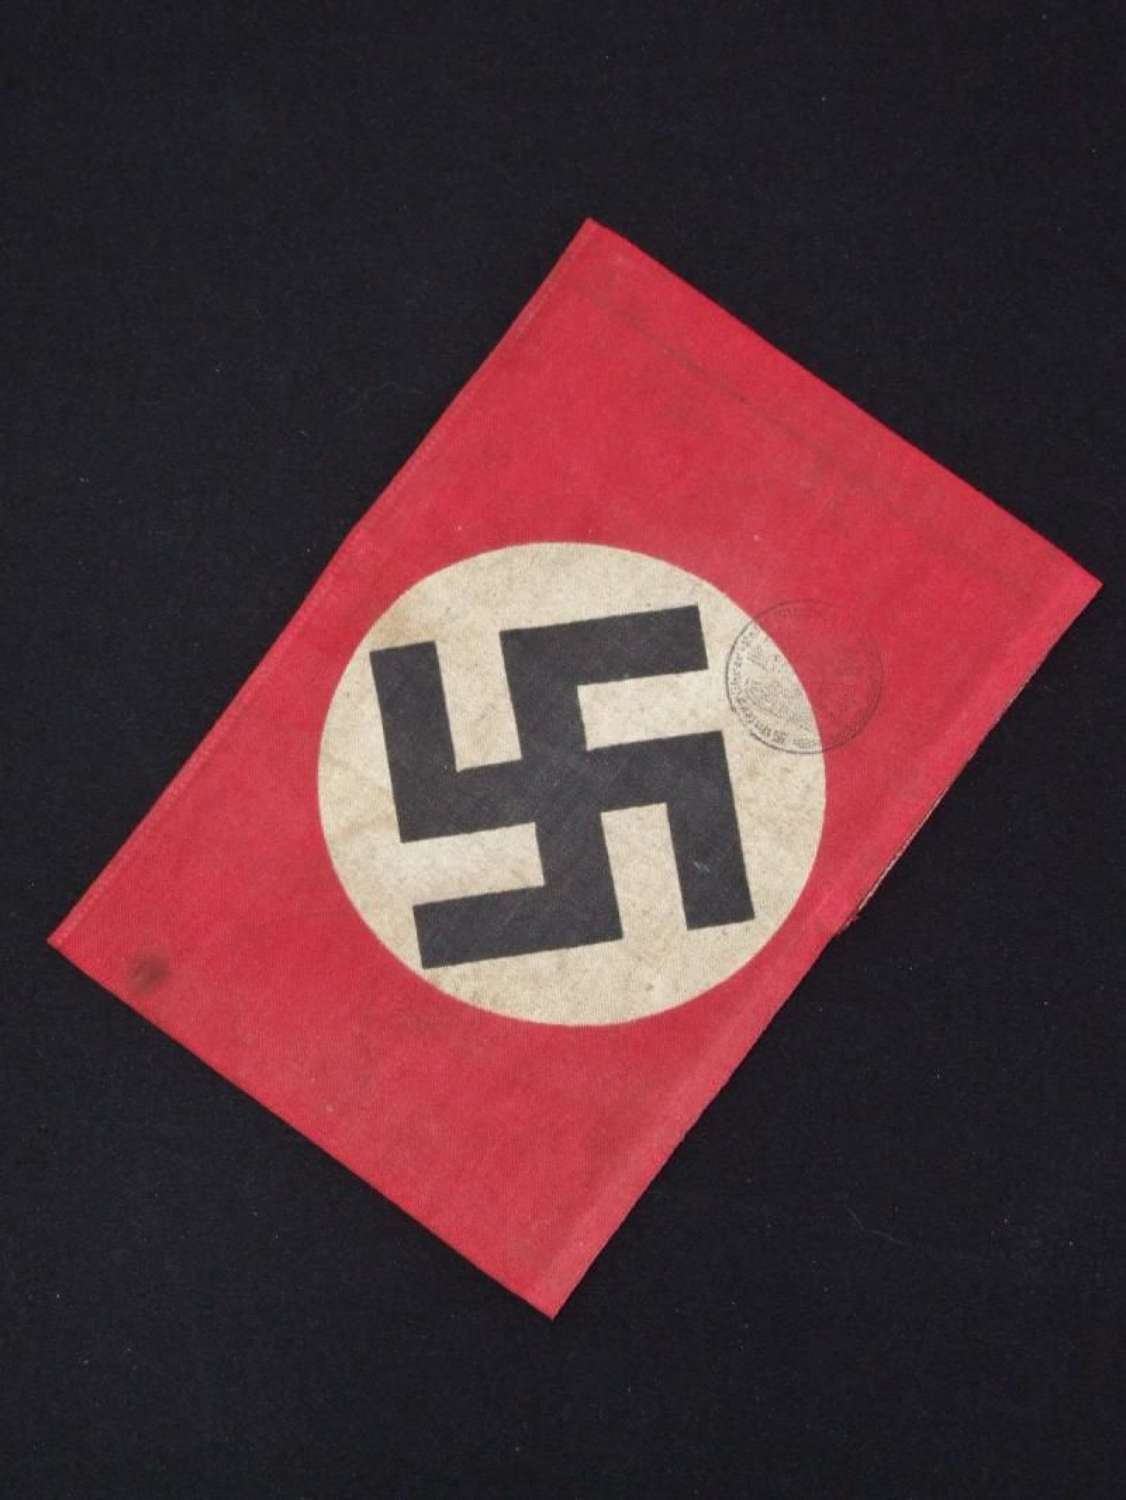 Printed version of the NSDAP Armband.